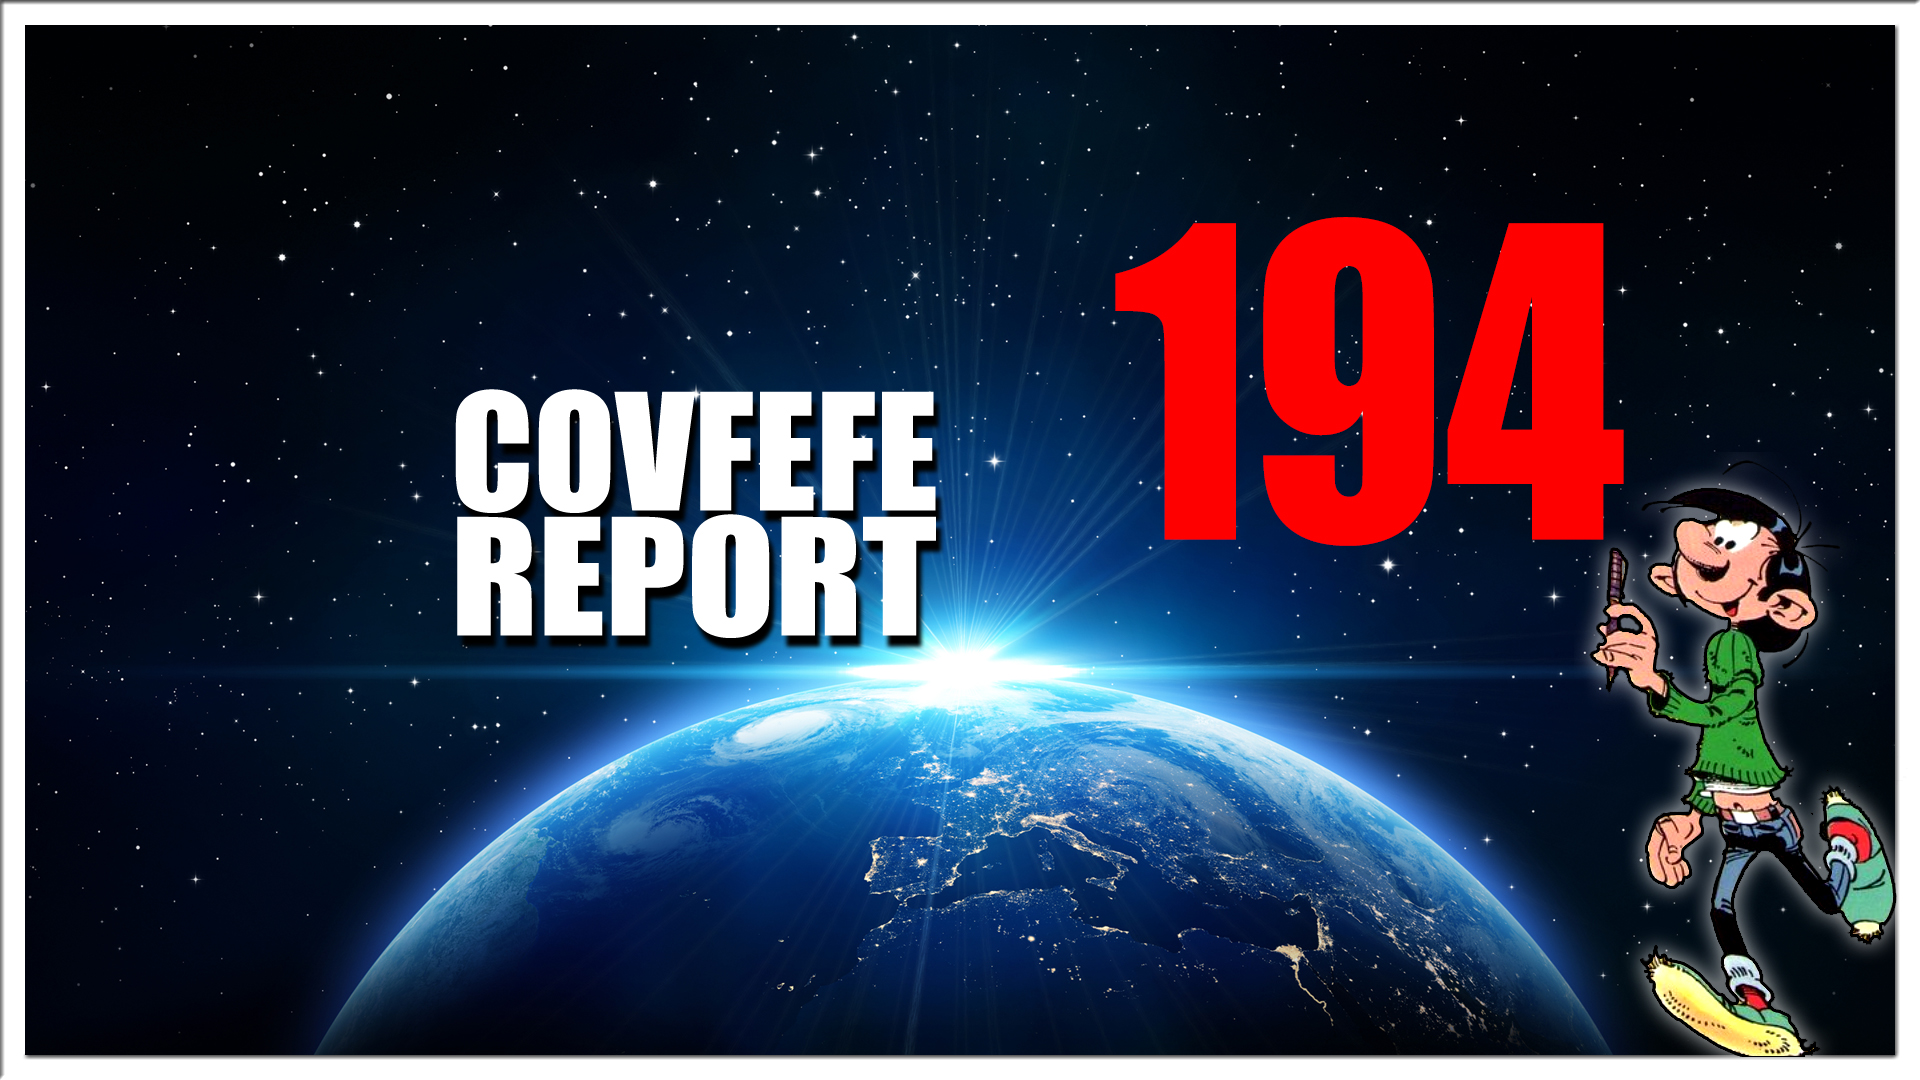 Covfefe Report 194. ngt